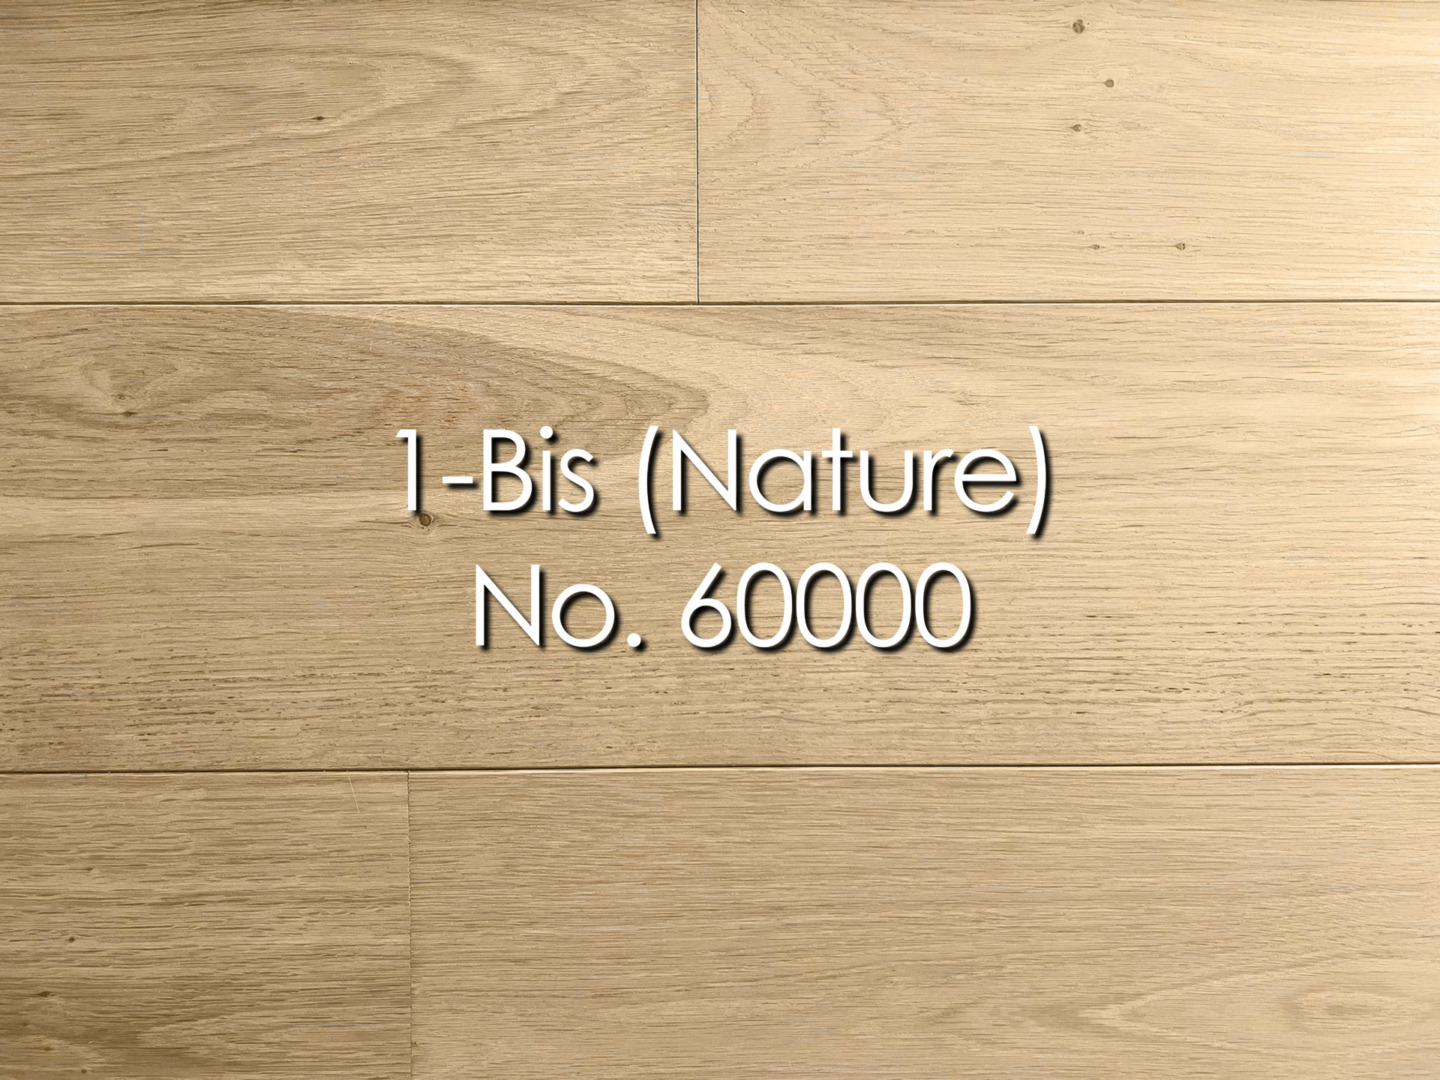 1-Bis (Nature), Nr. 60000